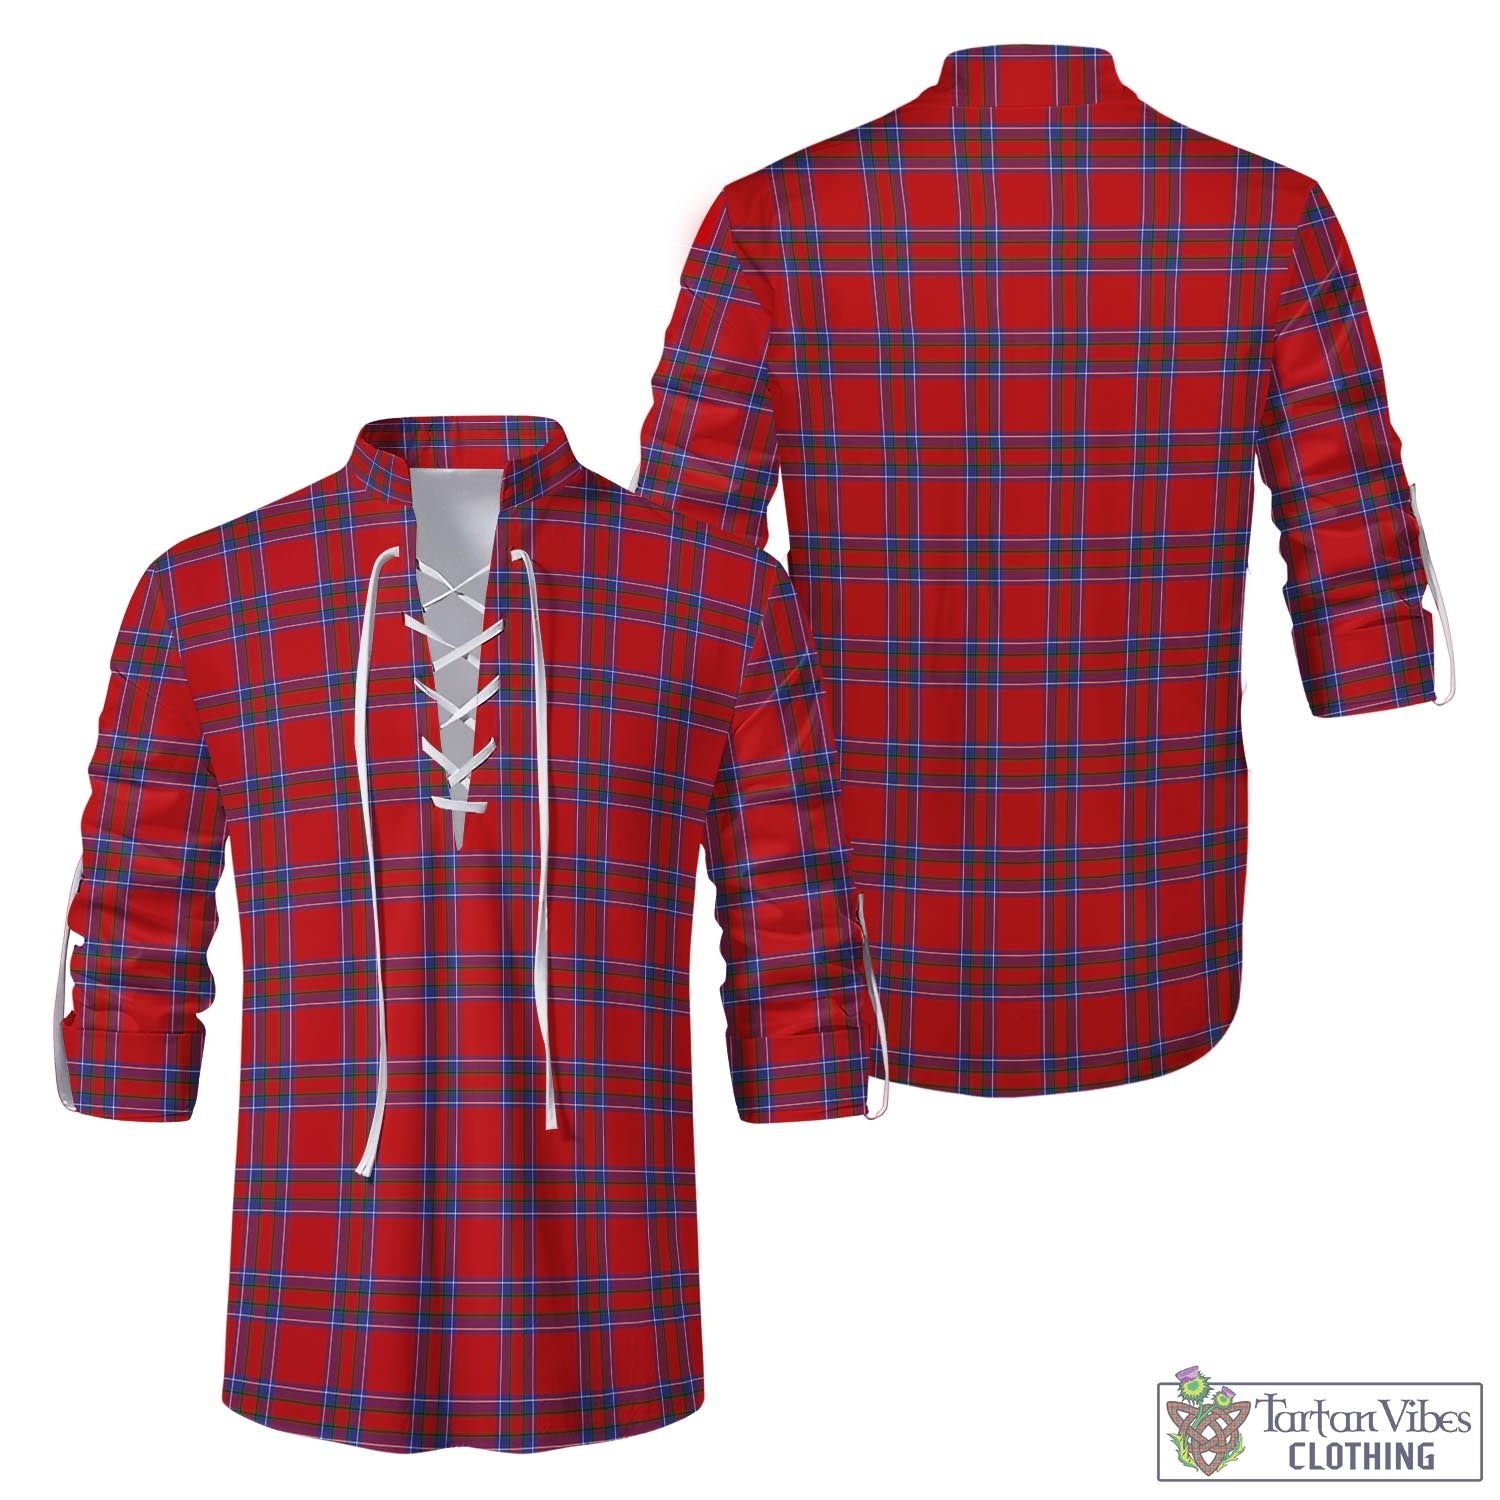 Tartan Vibes Clothing Rait Tartan Men's Scottish Traditional Jacobite Ghillie Kilt Shirt